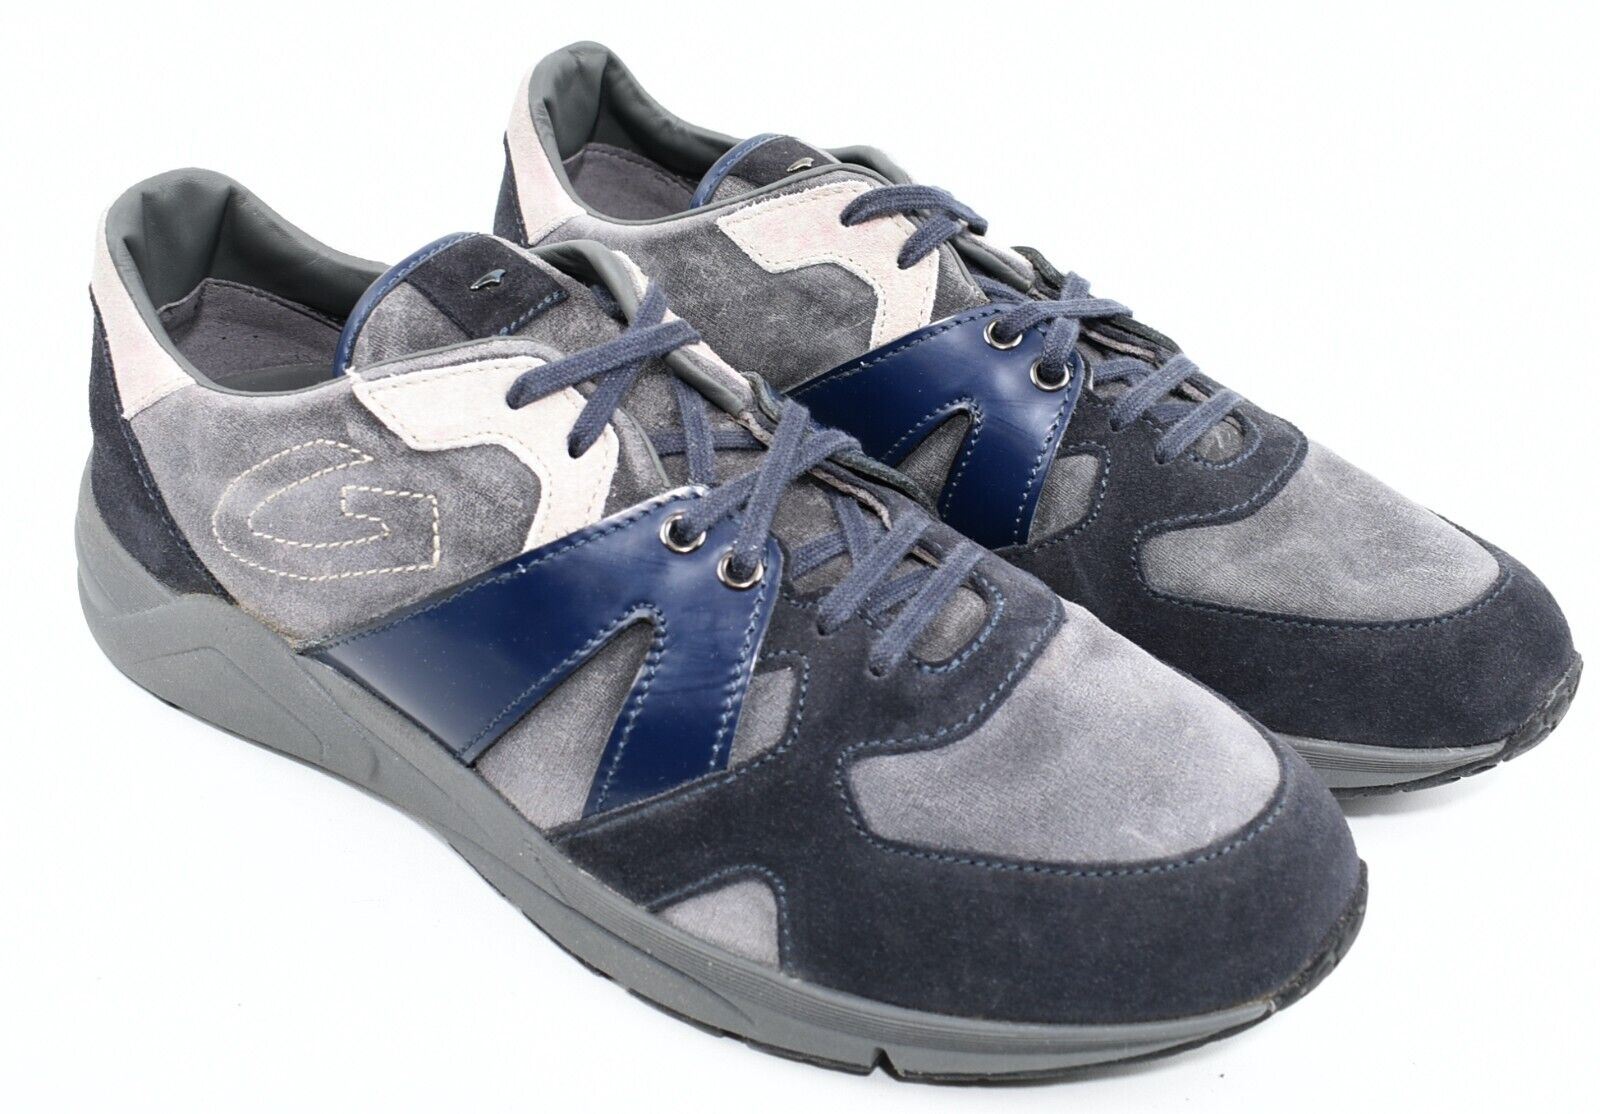 GUARDIANI SPORT Mens Sneakers Trainers, Grey/Navy Blue, size UK 10 /EU 44